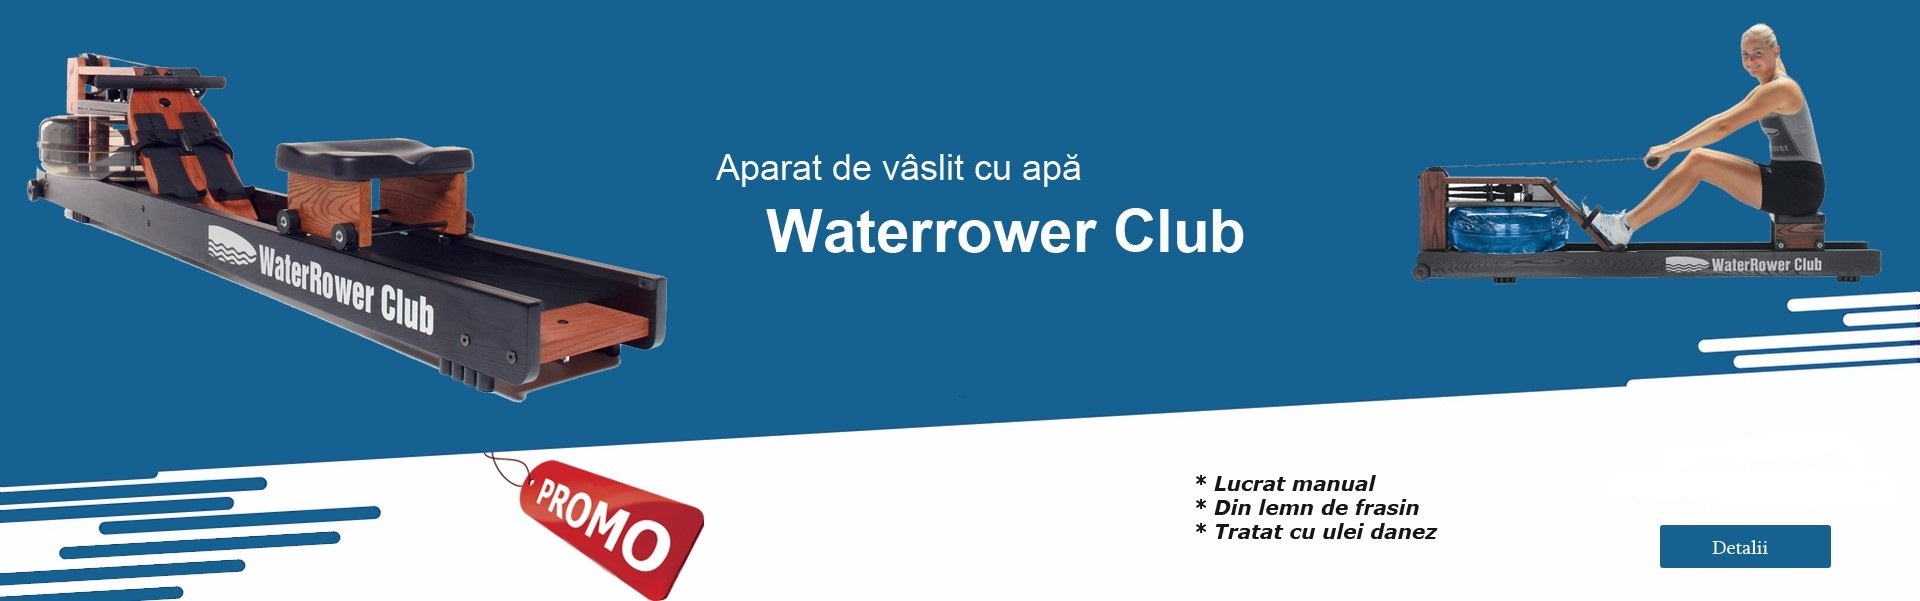 Waterrower Club S4